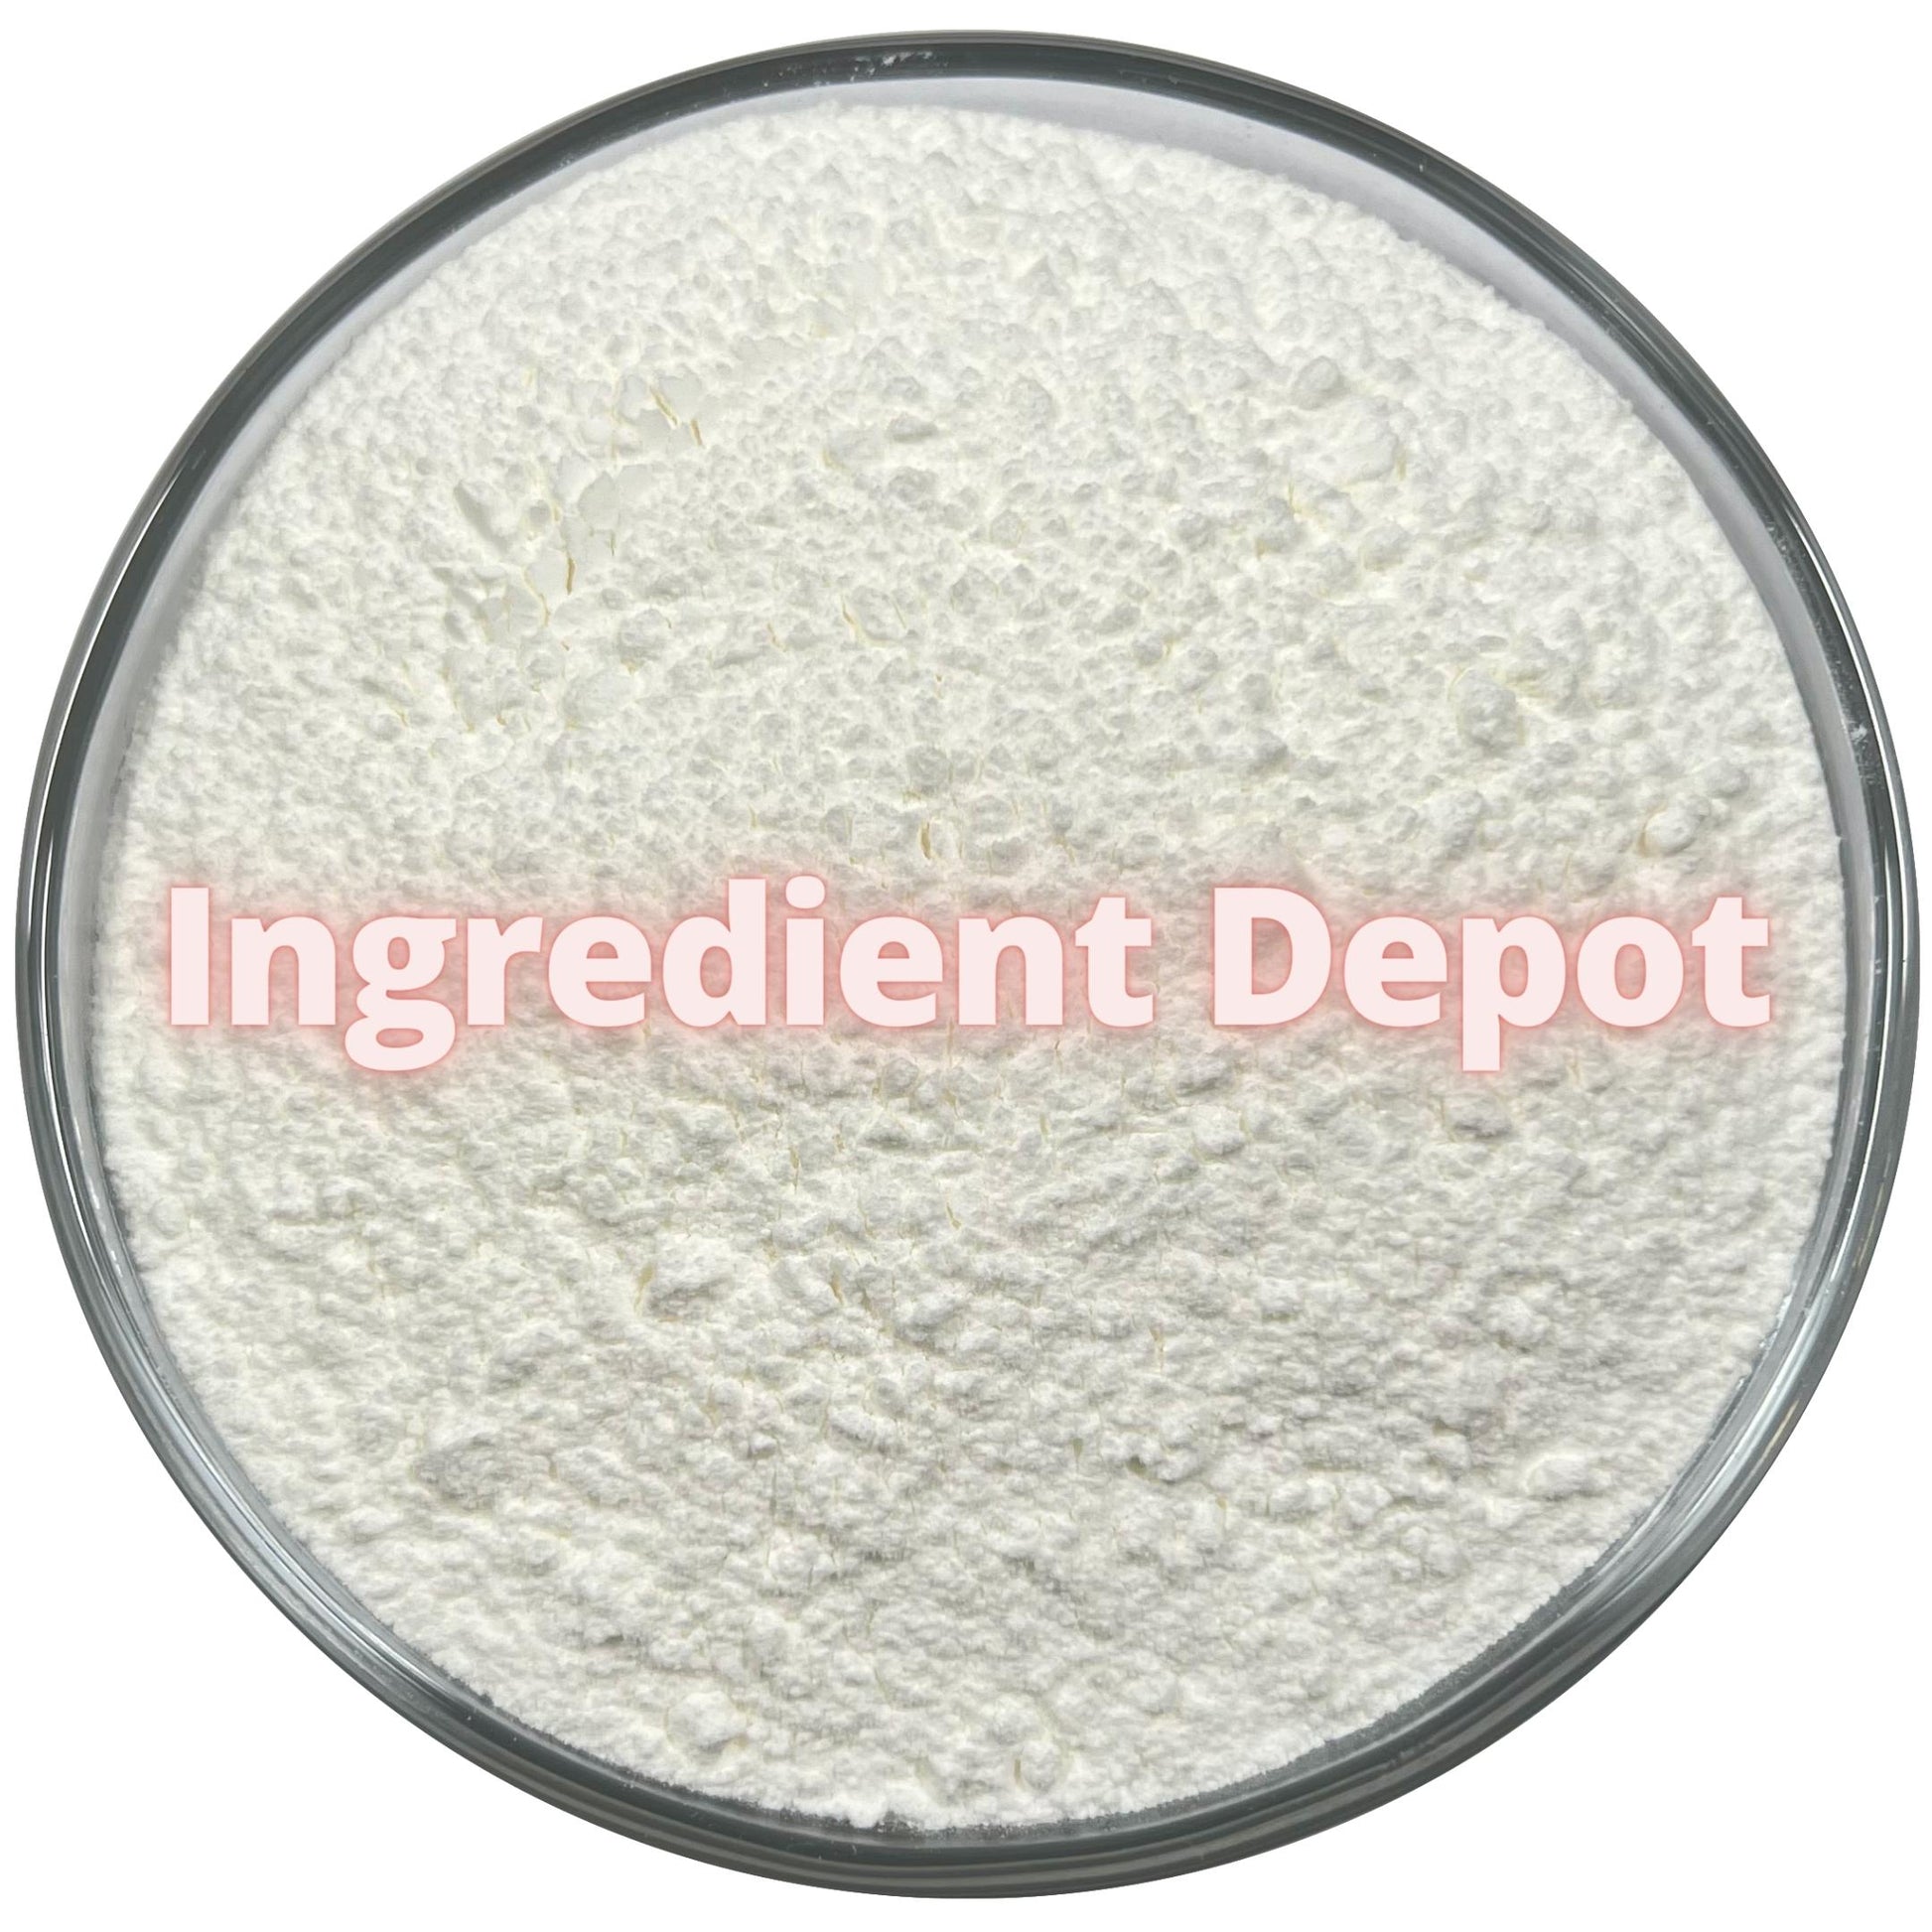 Lactose Super, Low pH, Food Grade 10 kgs - IngredientDepot.com